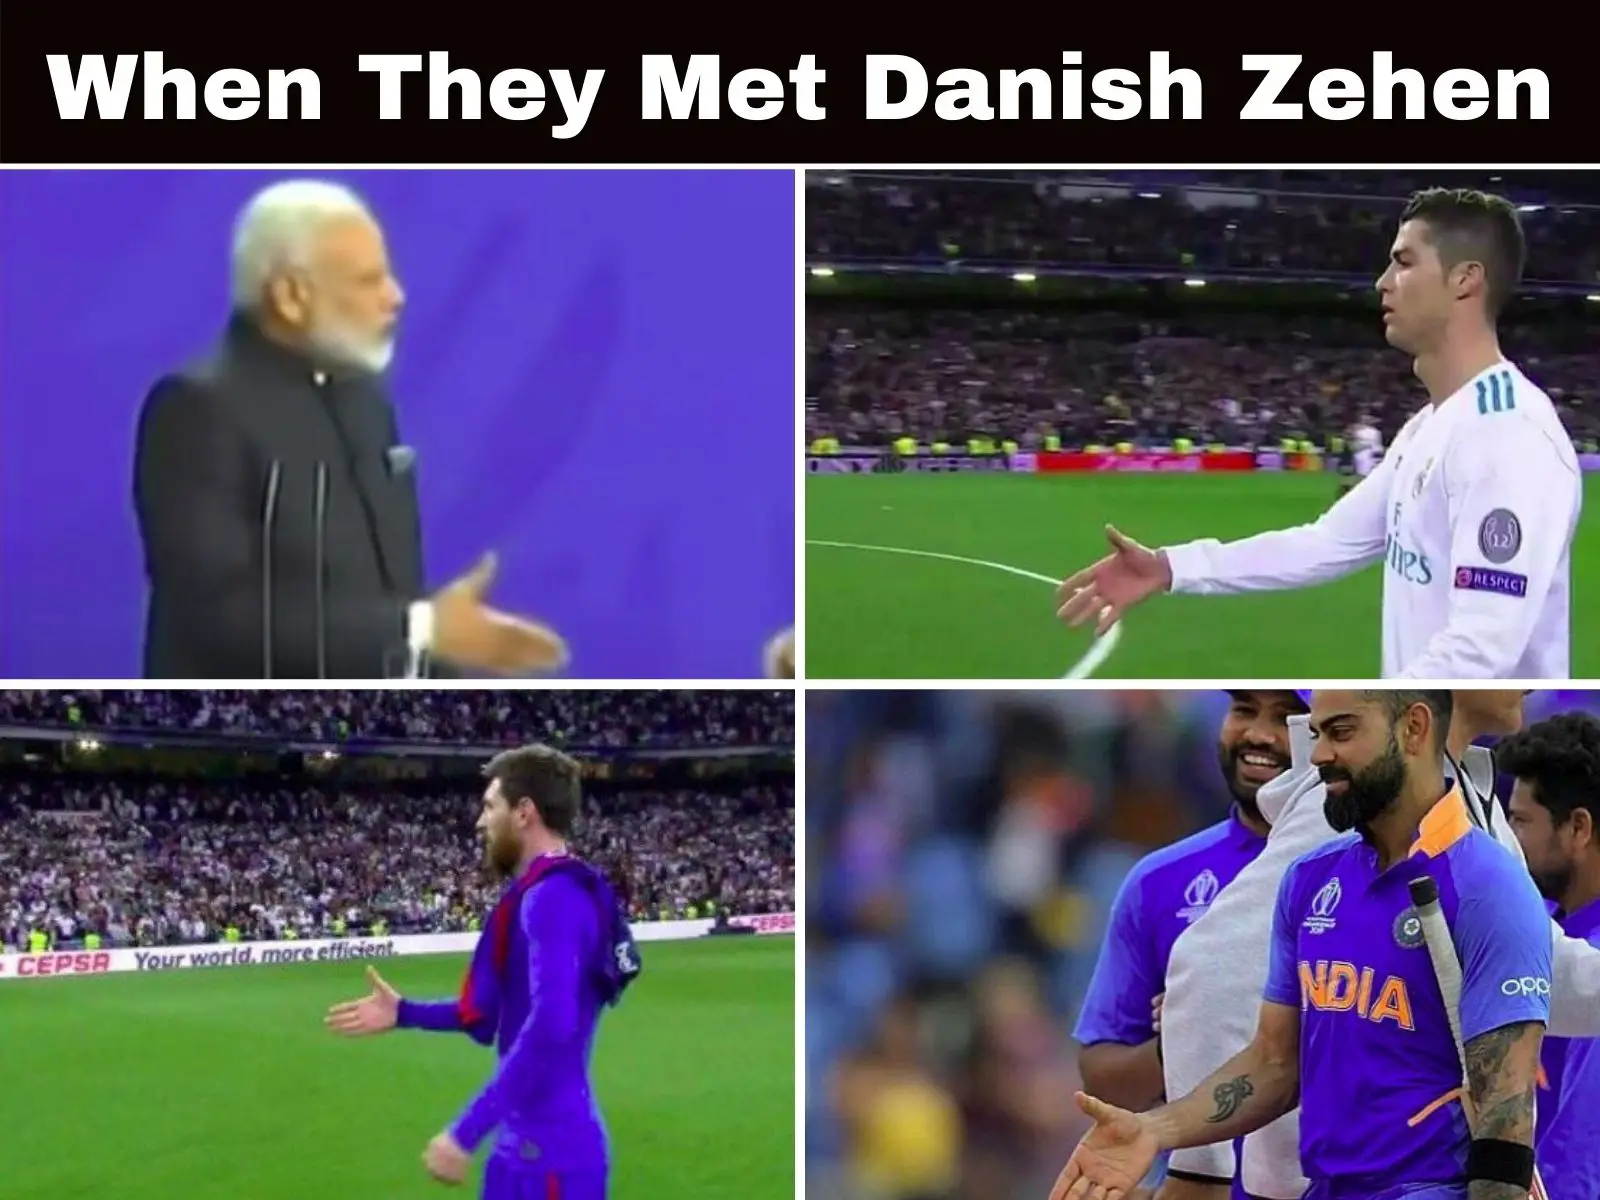 Danish Zehen meme on Dinesh Jain